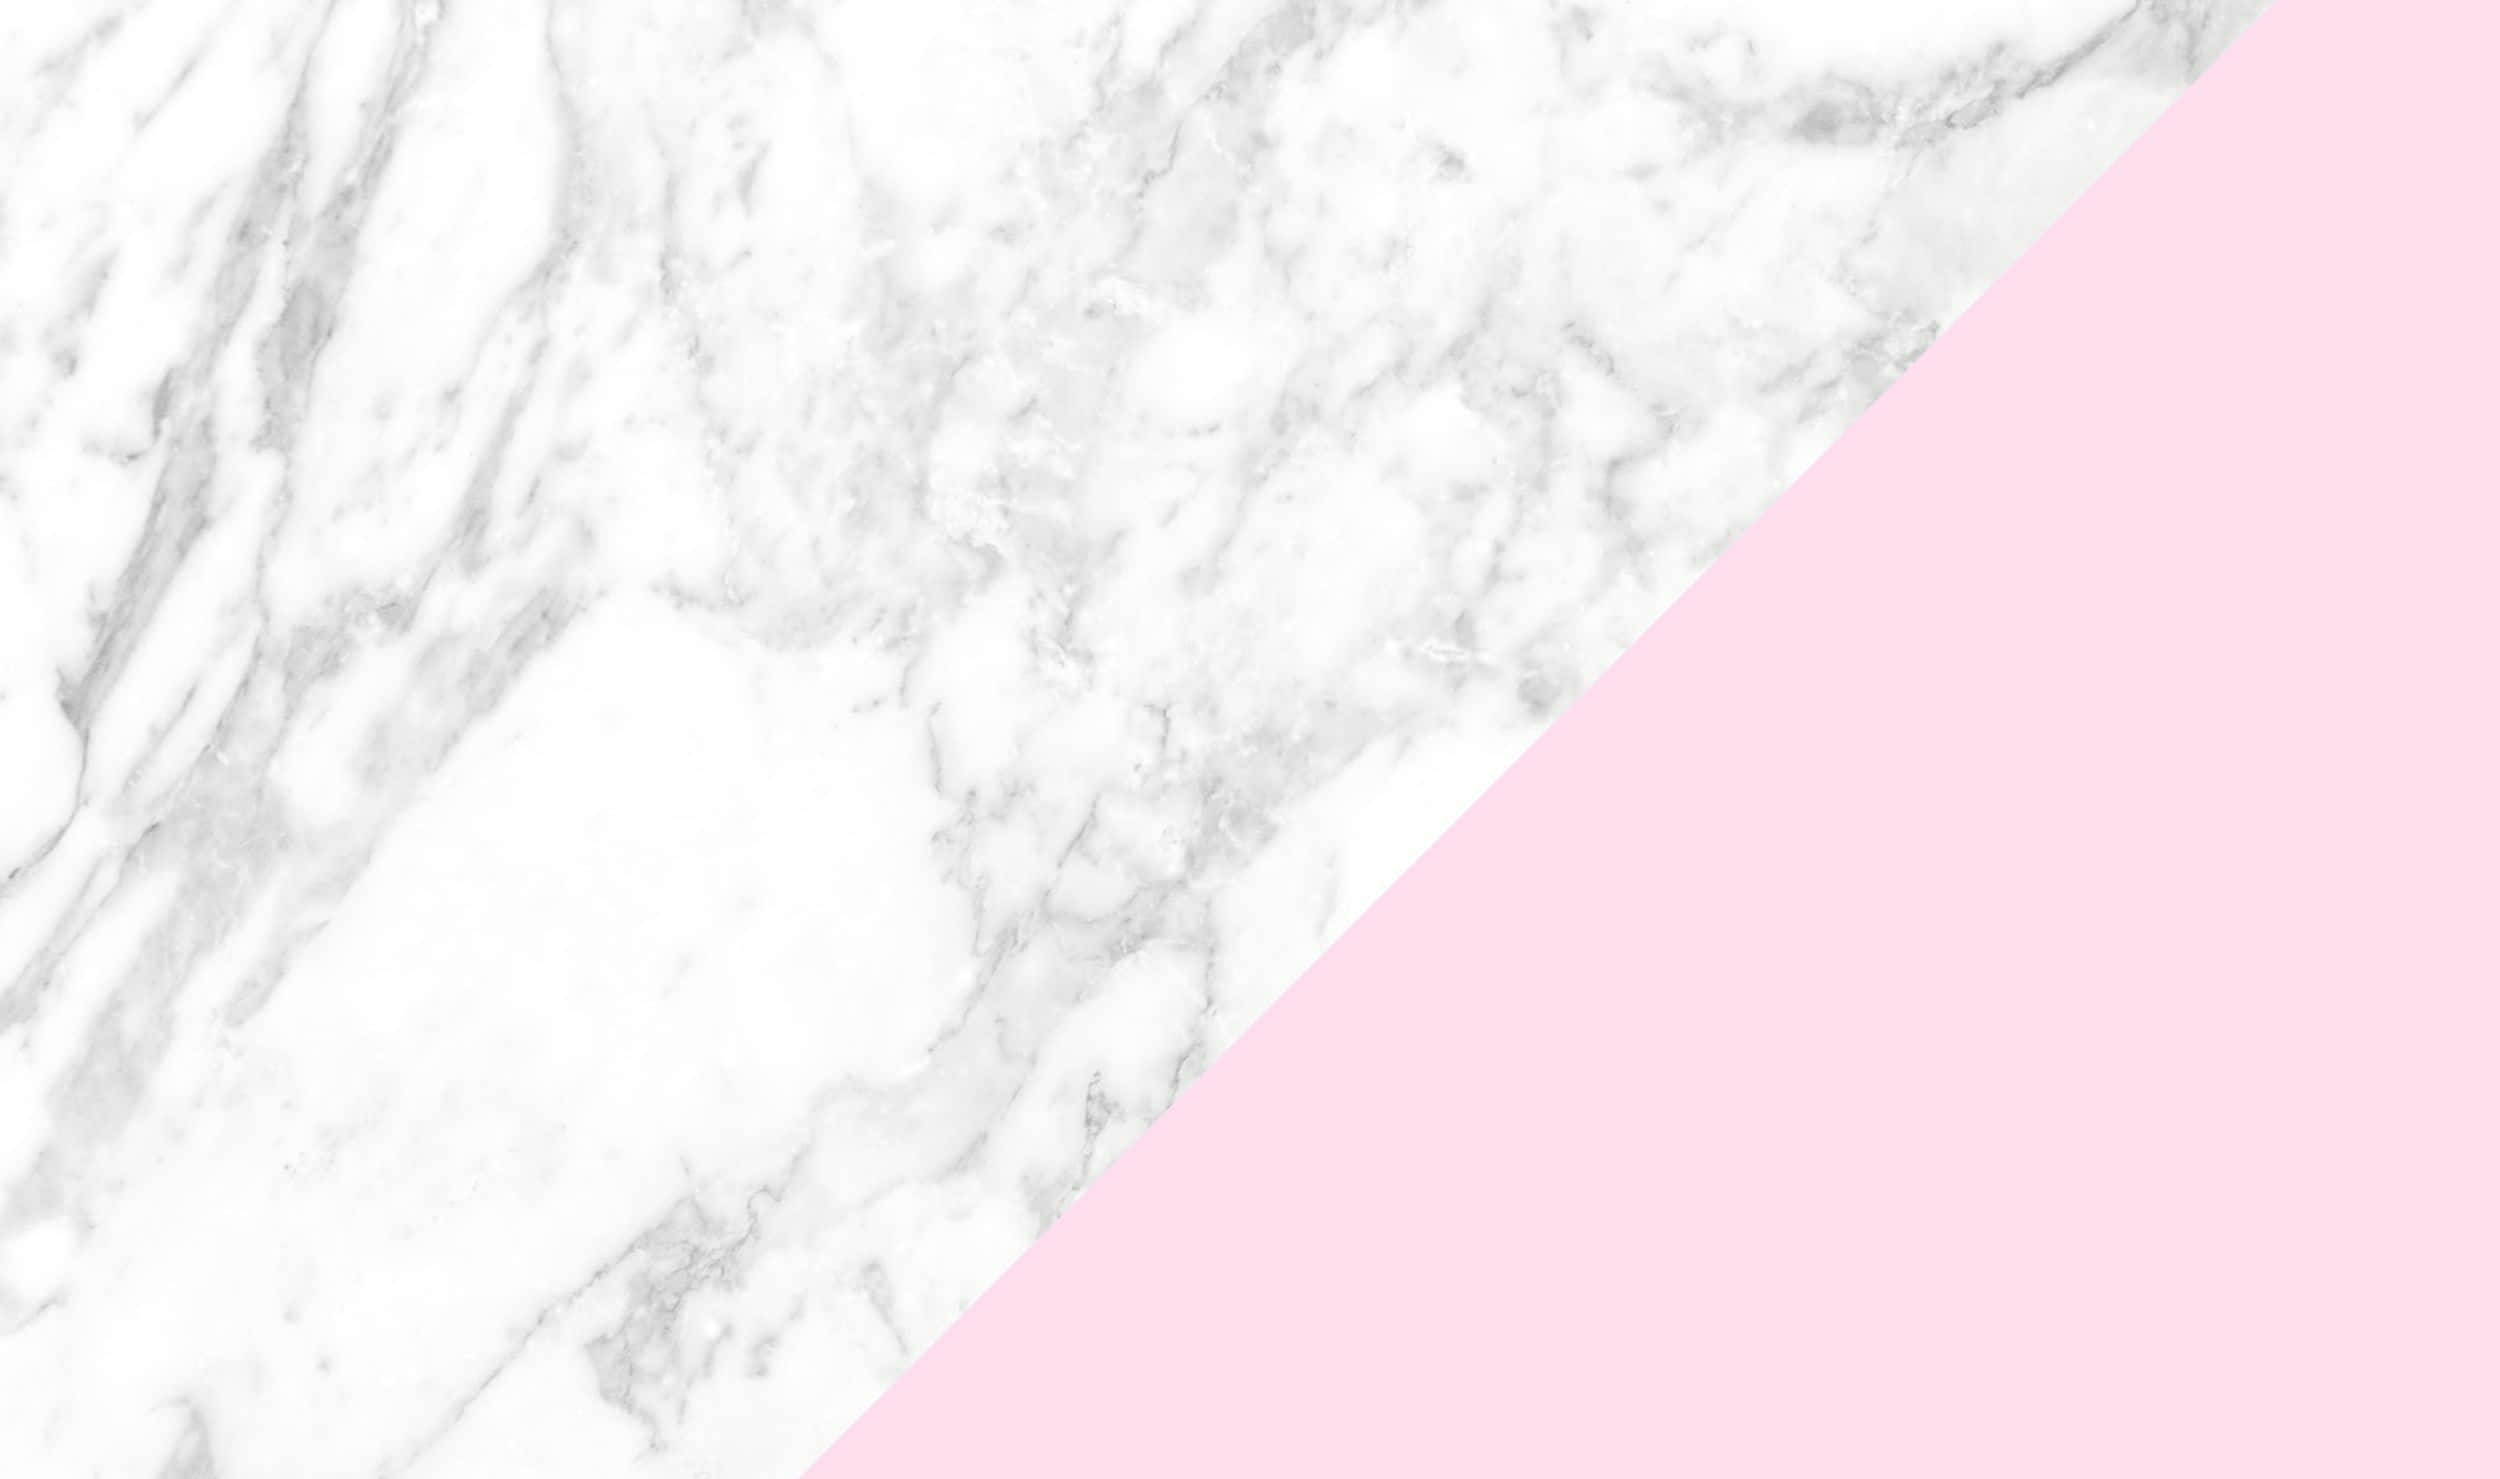 Caption: Elegant Pink Marble Background